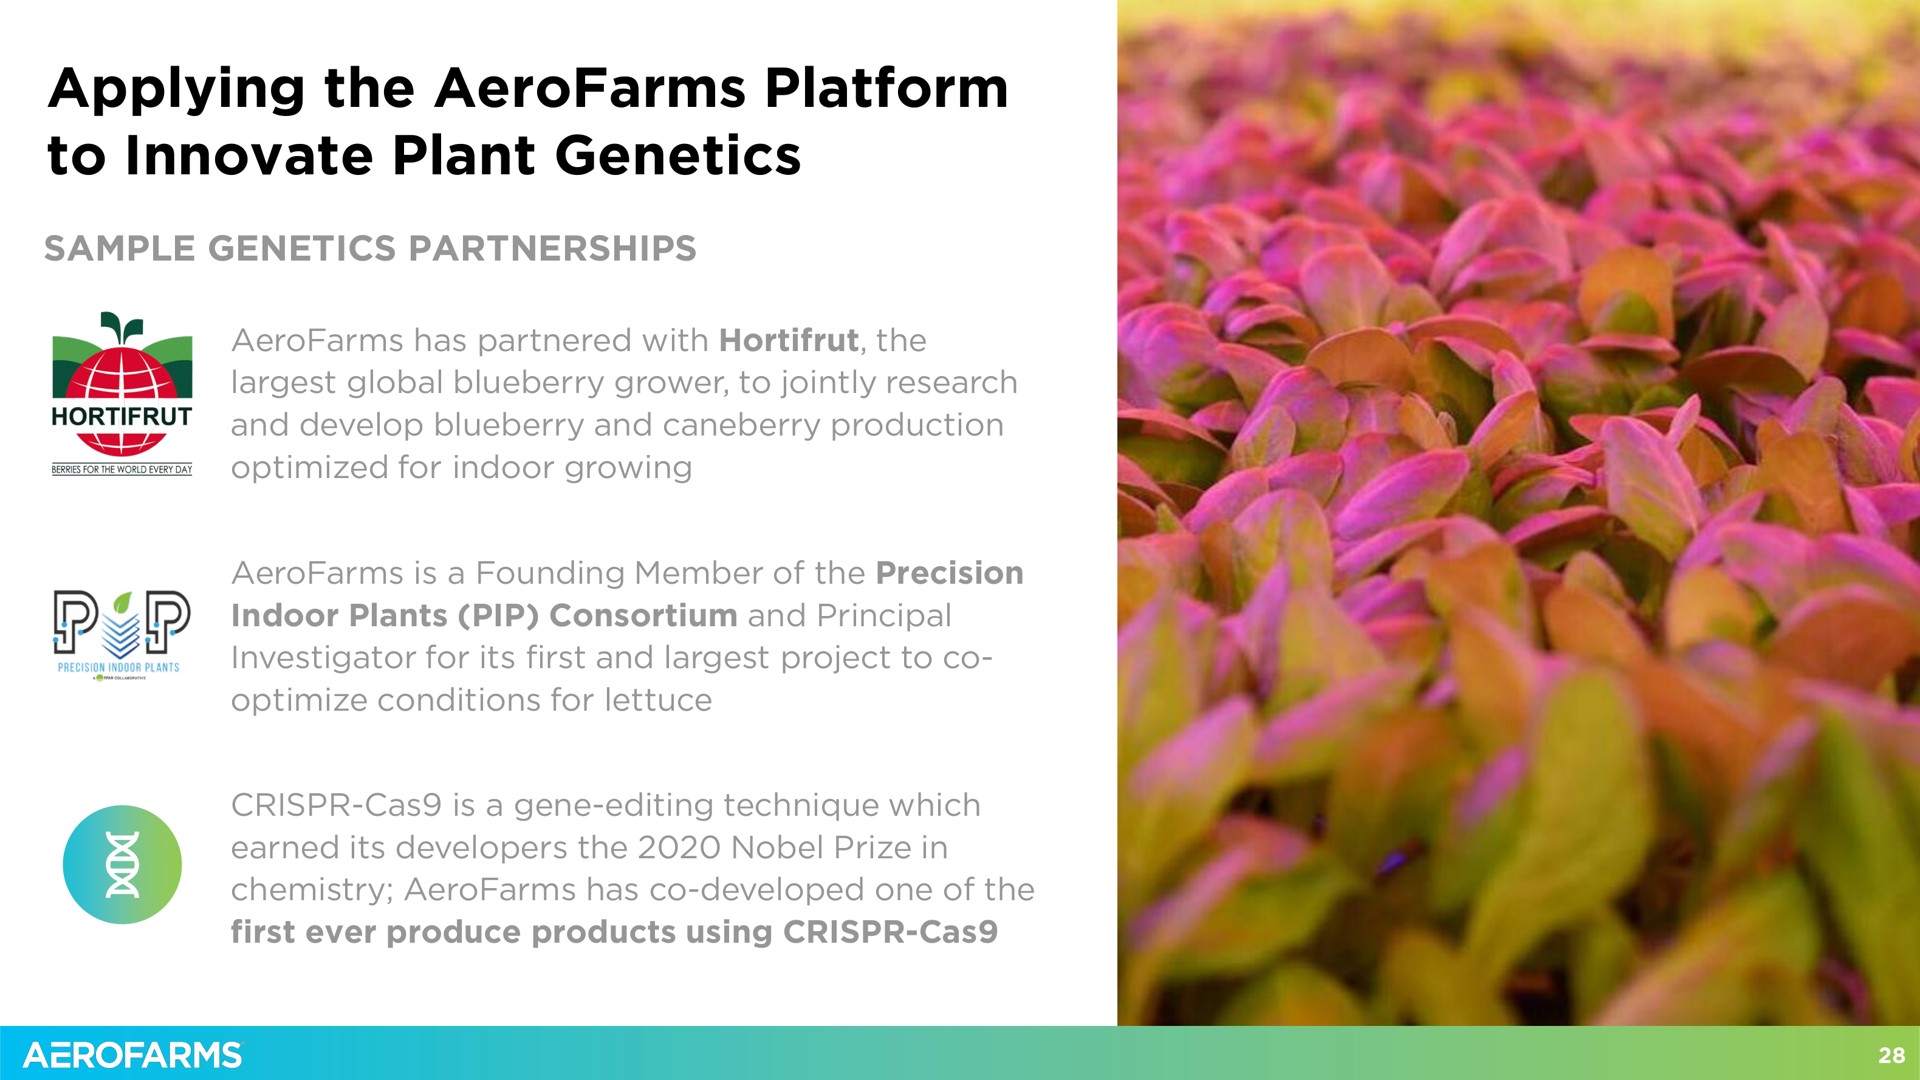 applying the platform to innovate plant genetics | AeroFarms